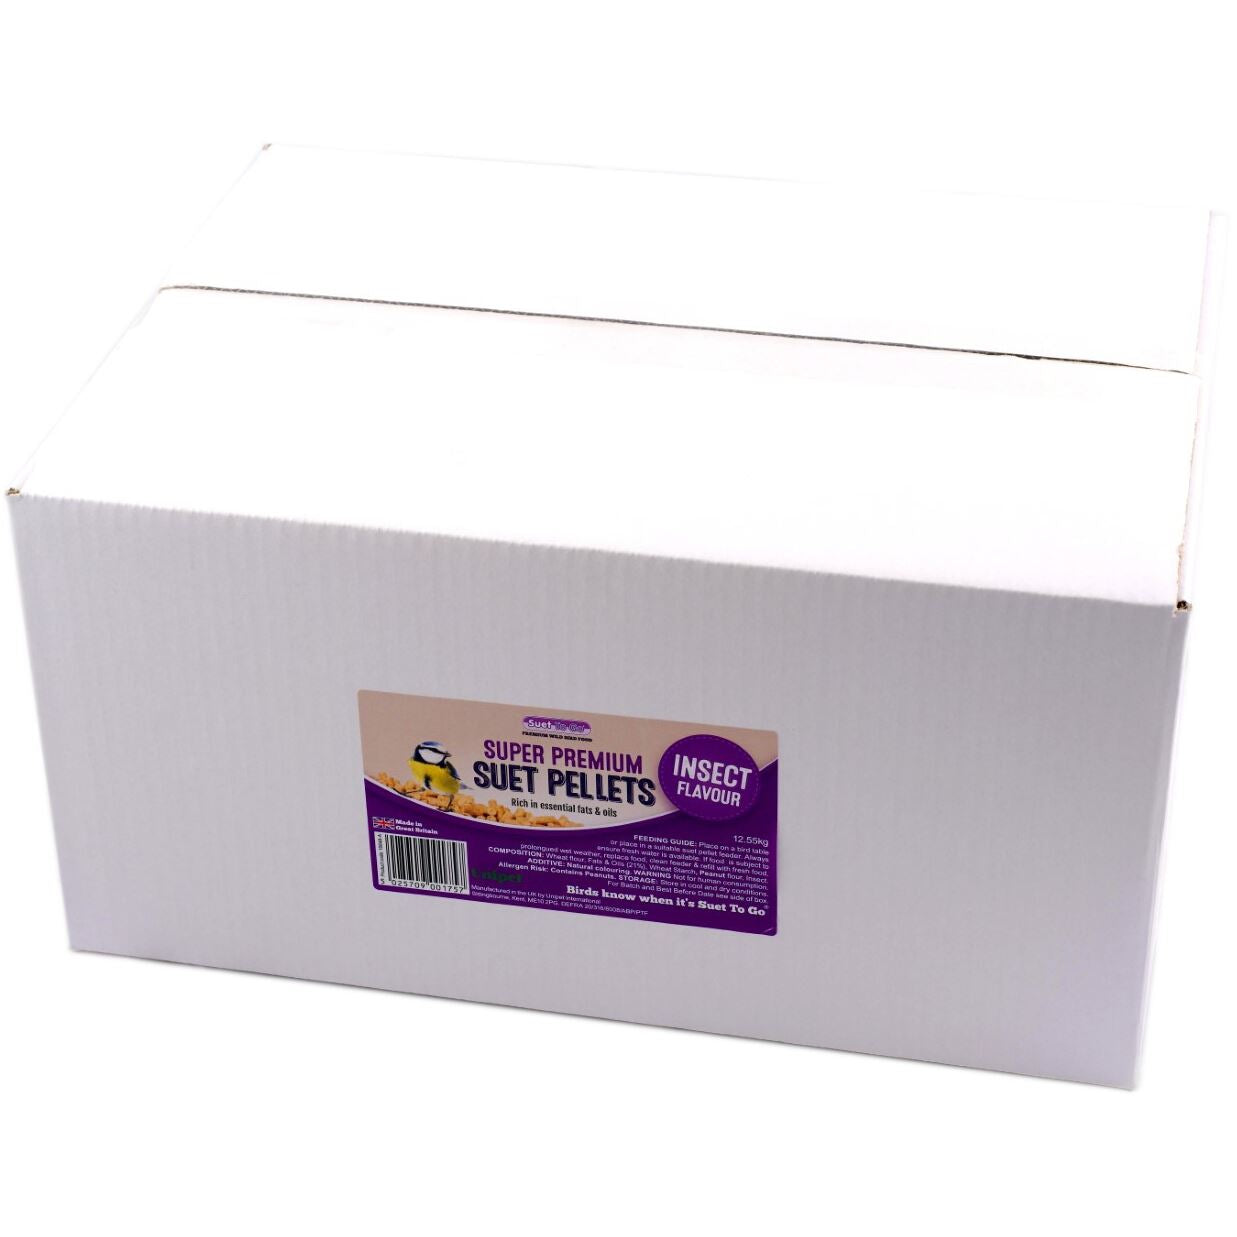 Suet To Go - Suet Pellets Insect, 12.55kg Box